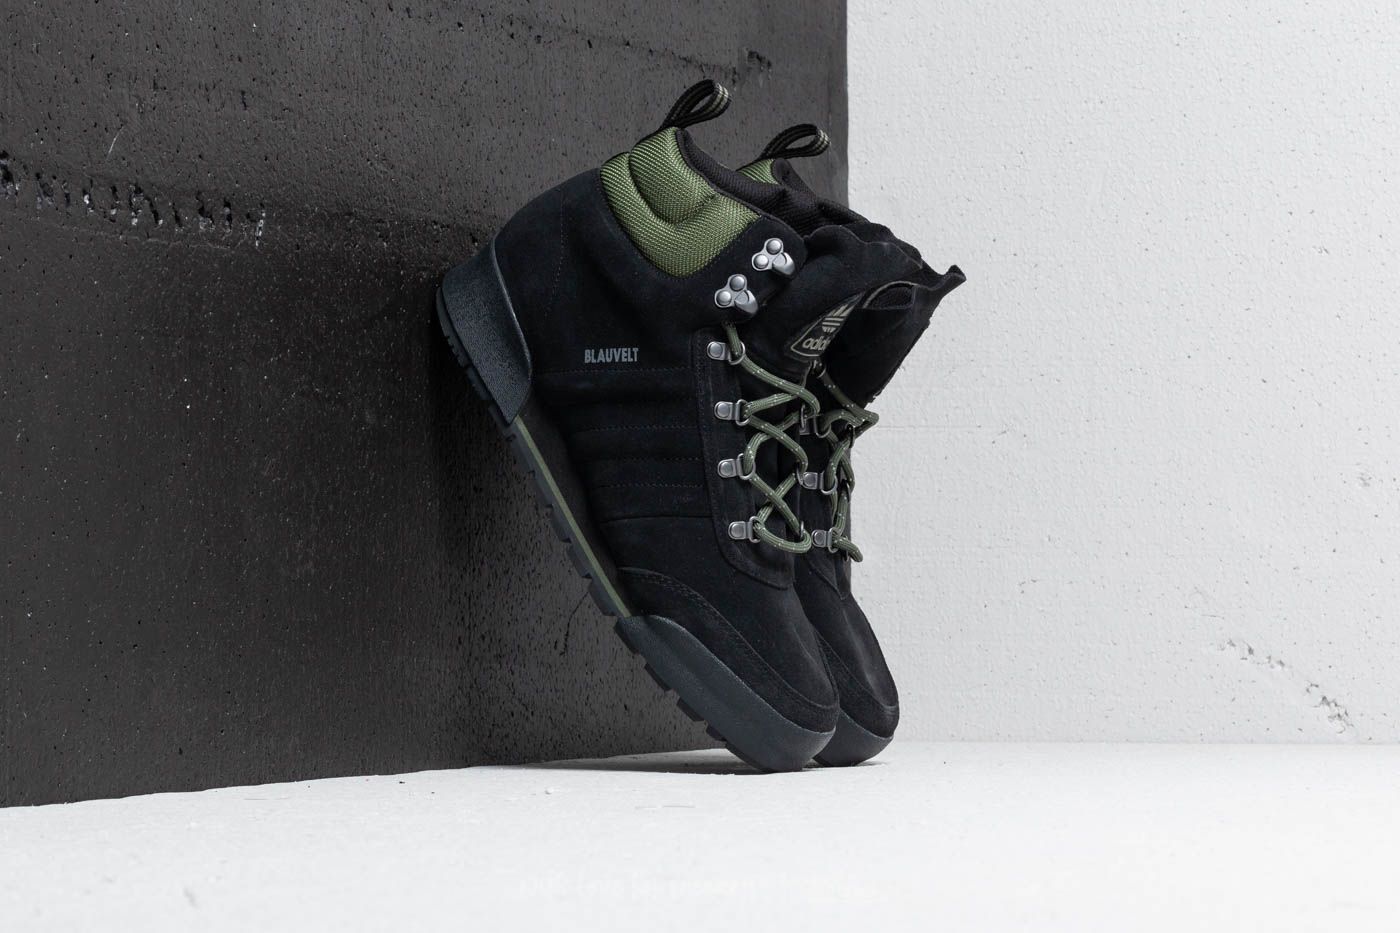 Chaussures et baskets homme adidas Jake Boot 2.0 Core Black/ Base Green/ Core Black